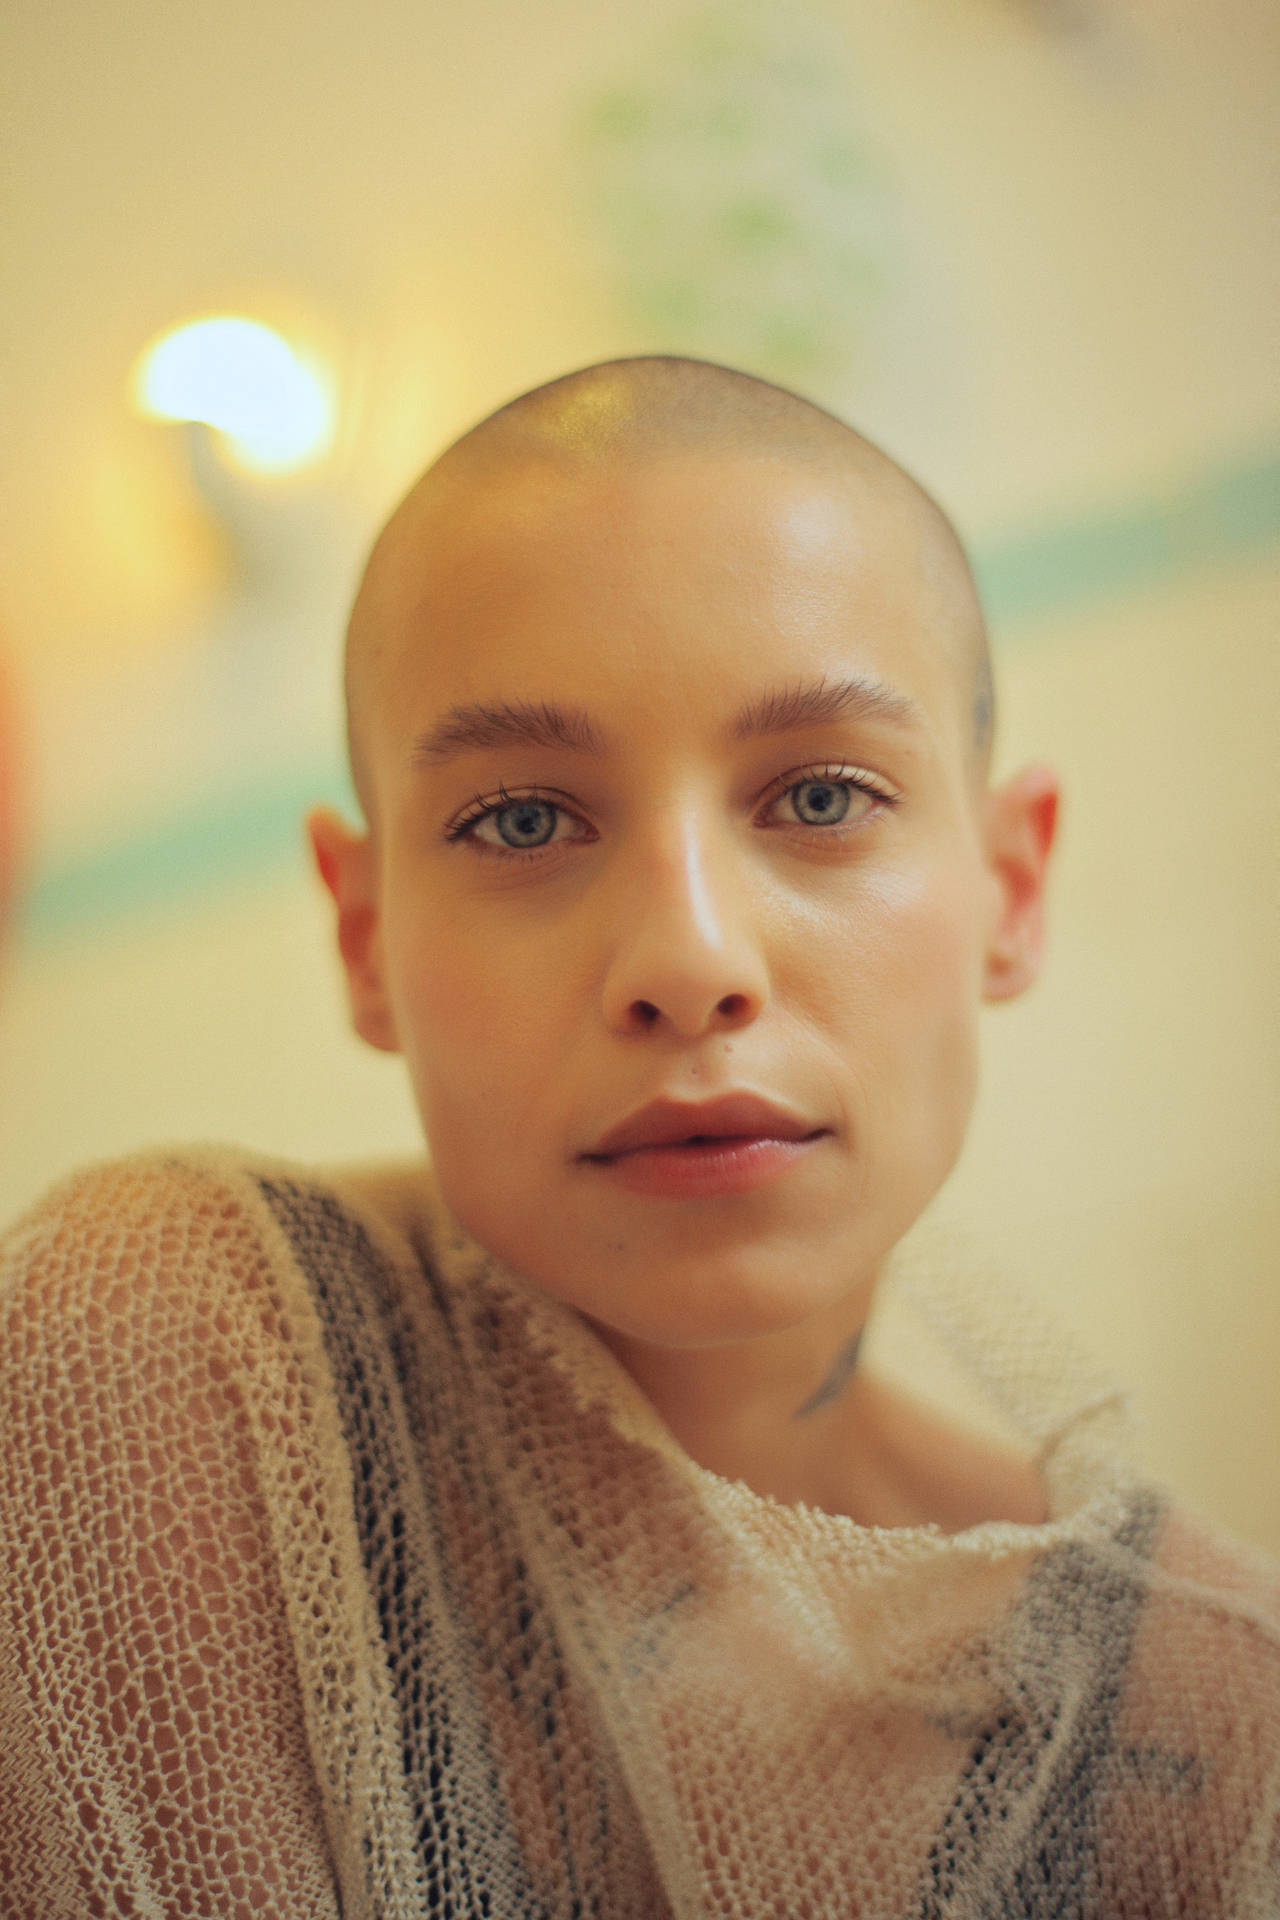 Bald Woman In Headshot Photo Wallpaper